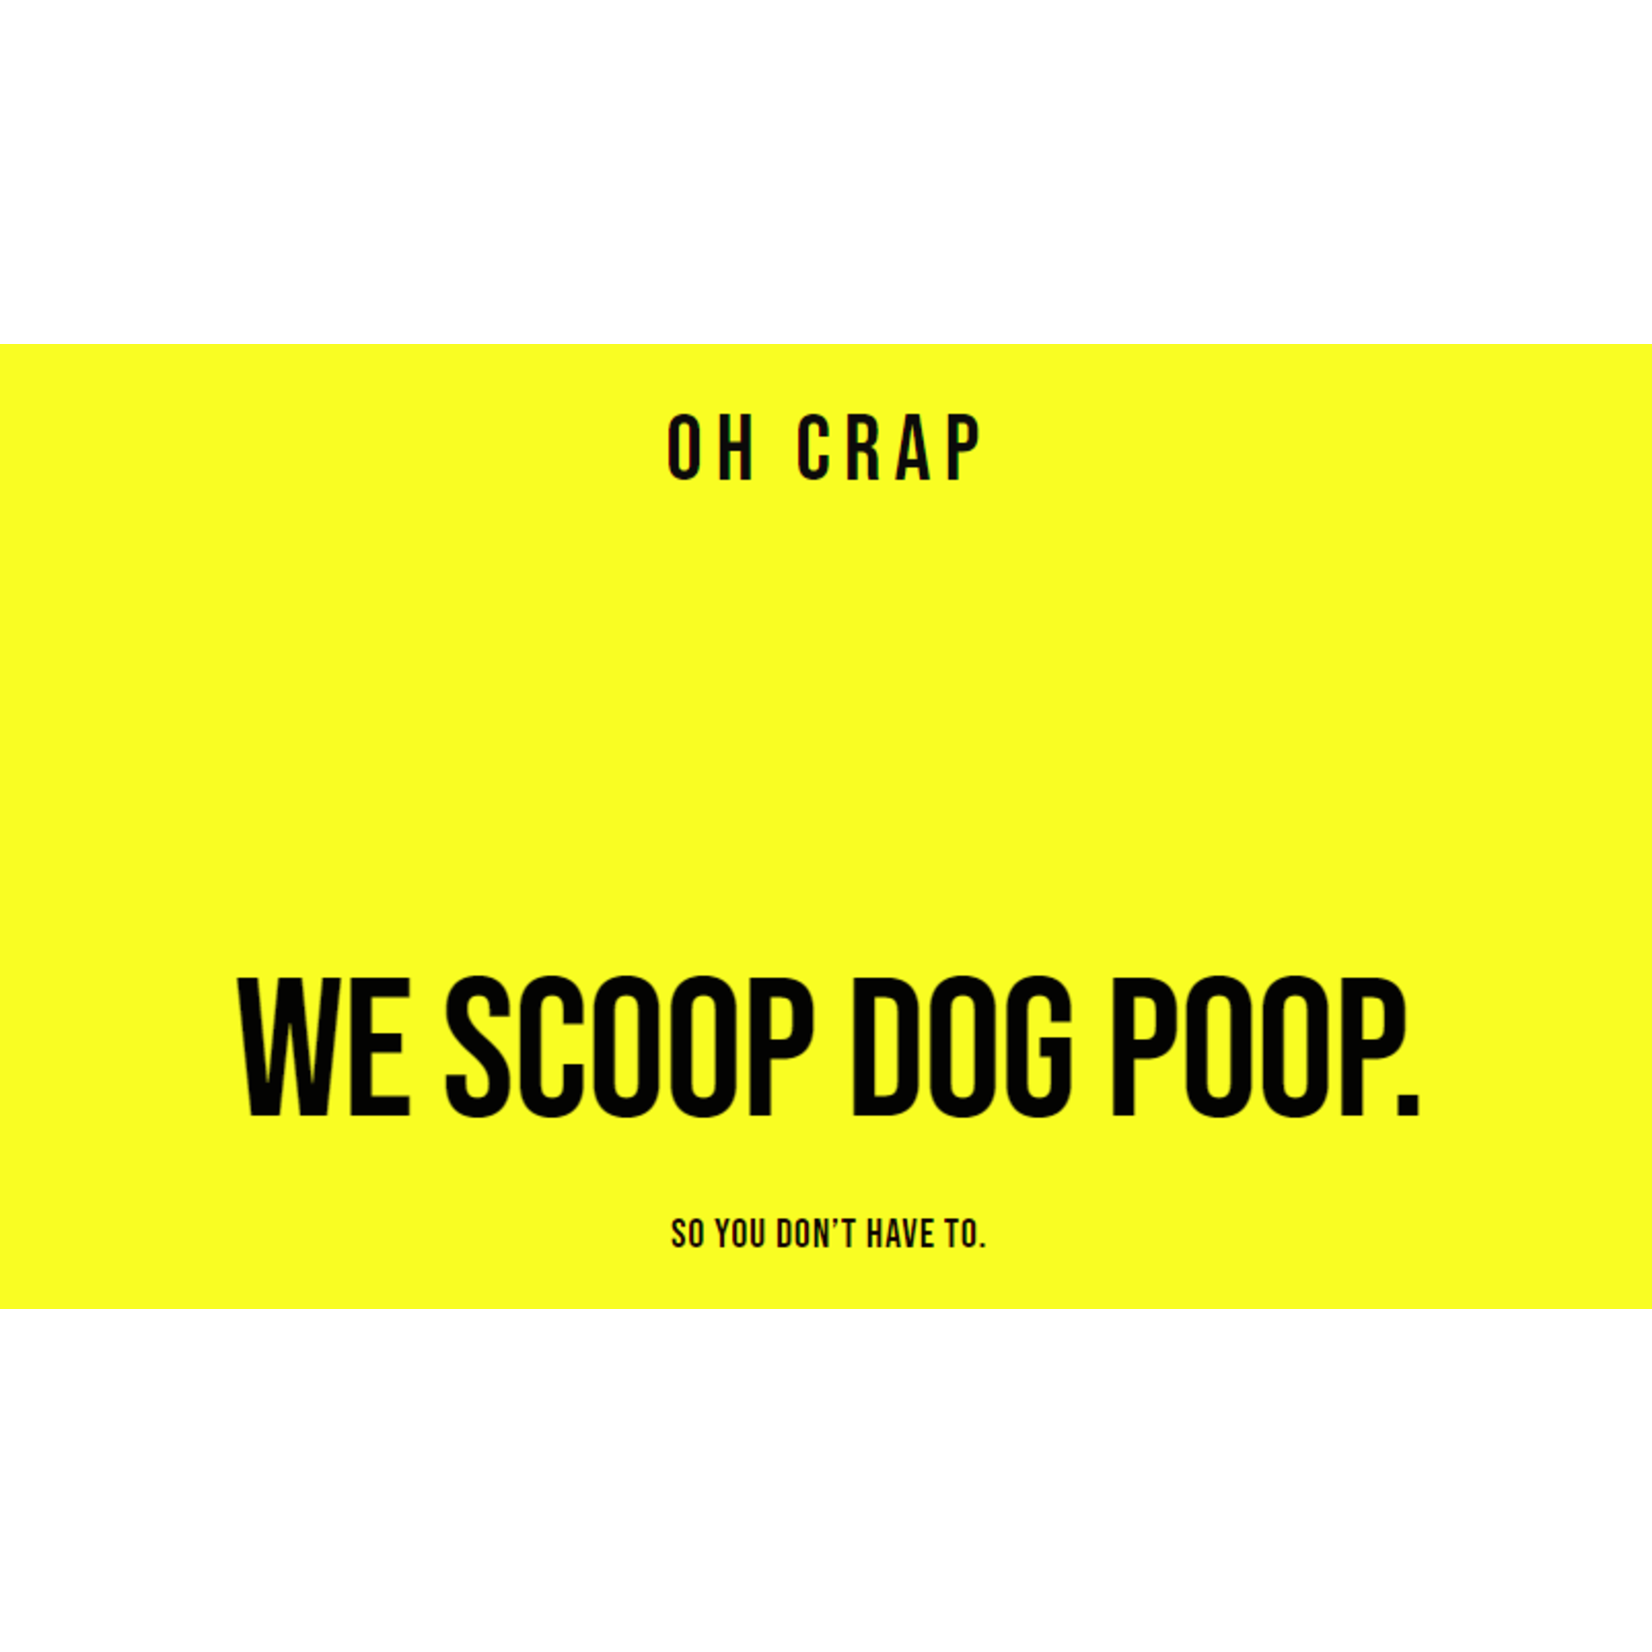 Oh Crap LV Oh Crap LV $15 - Pooper scooper services